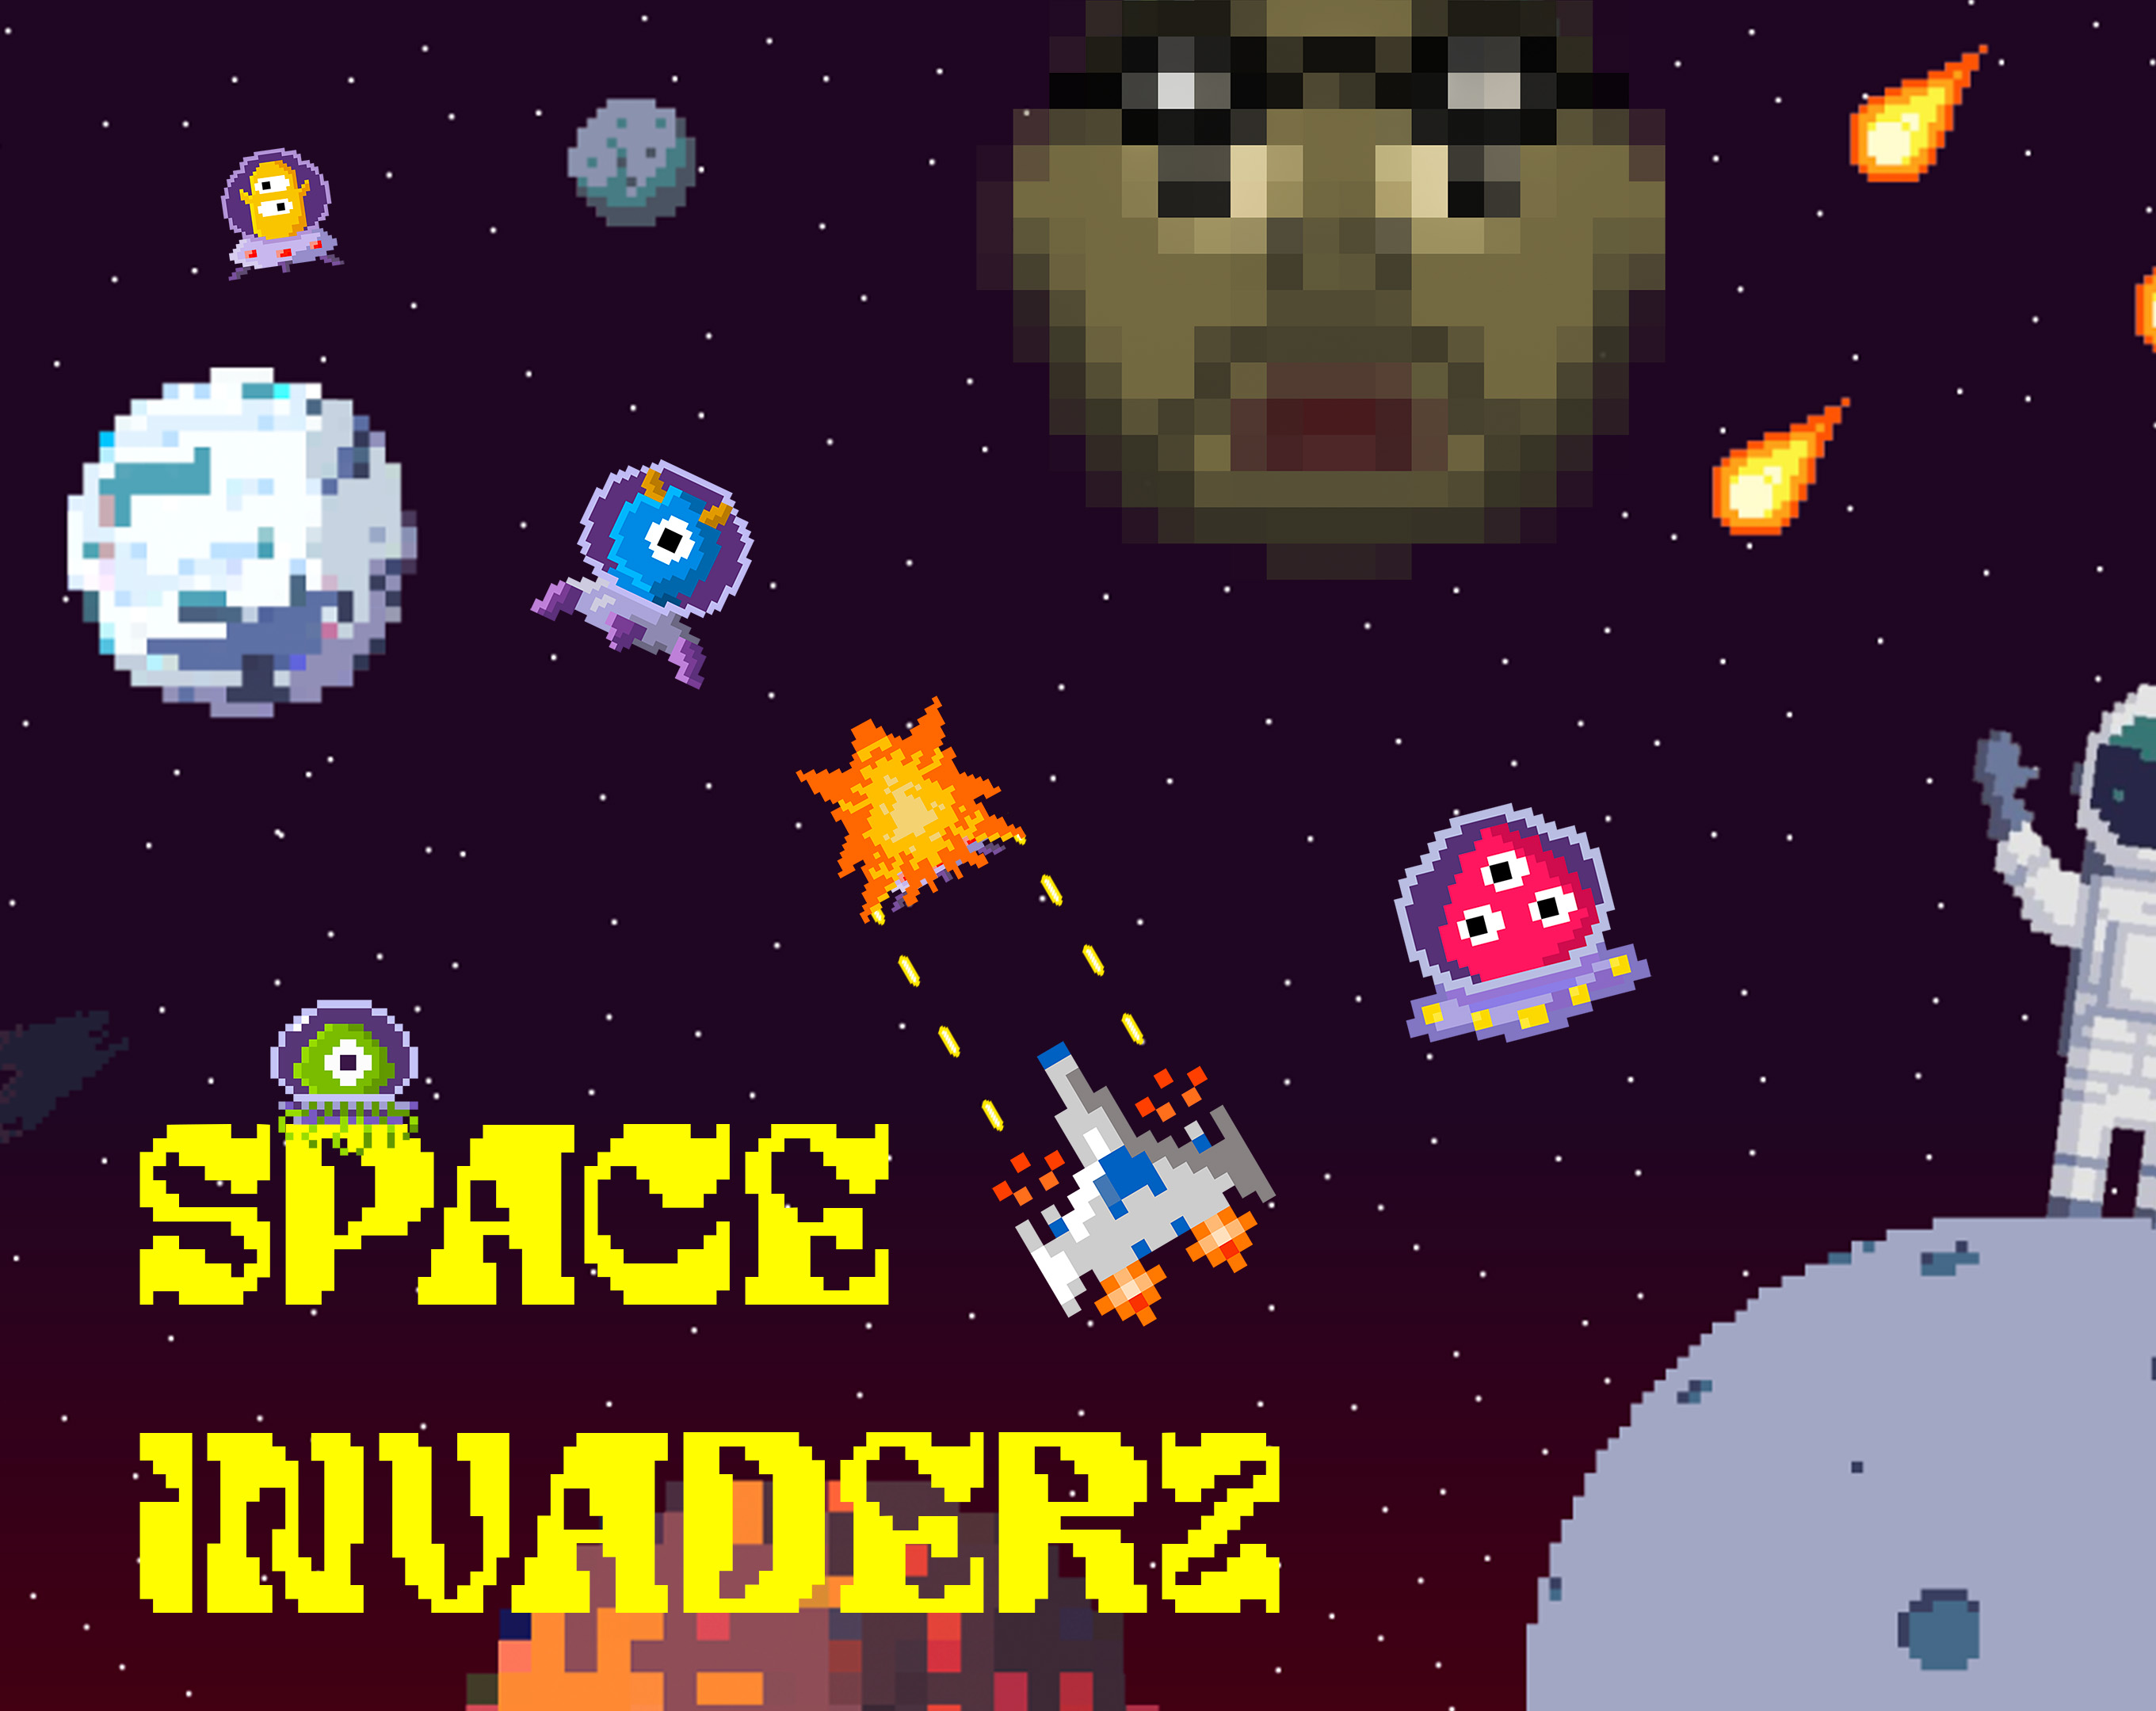 Space Invaderz